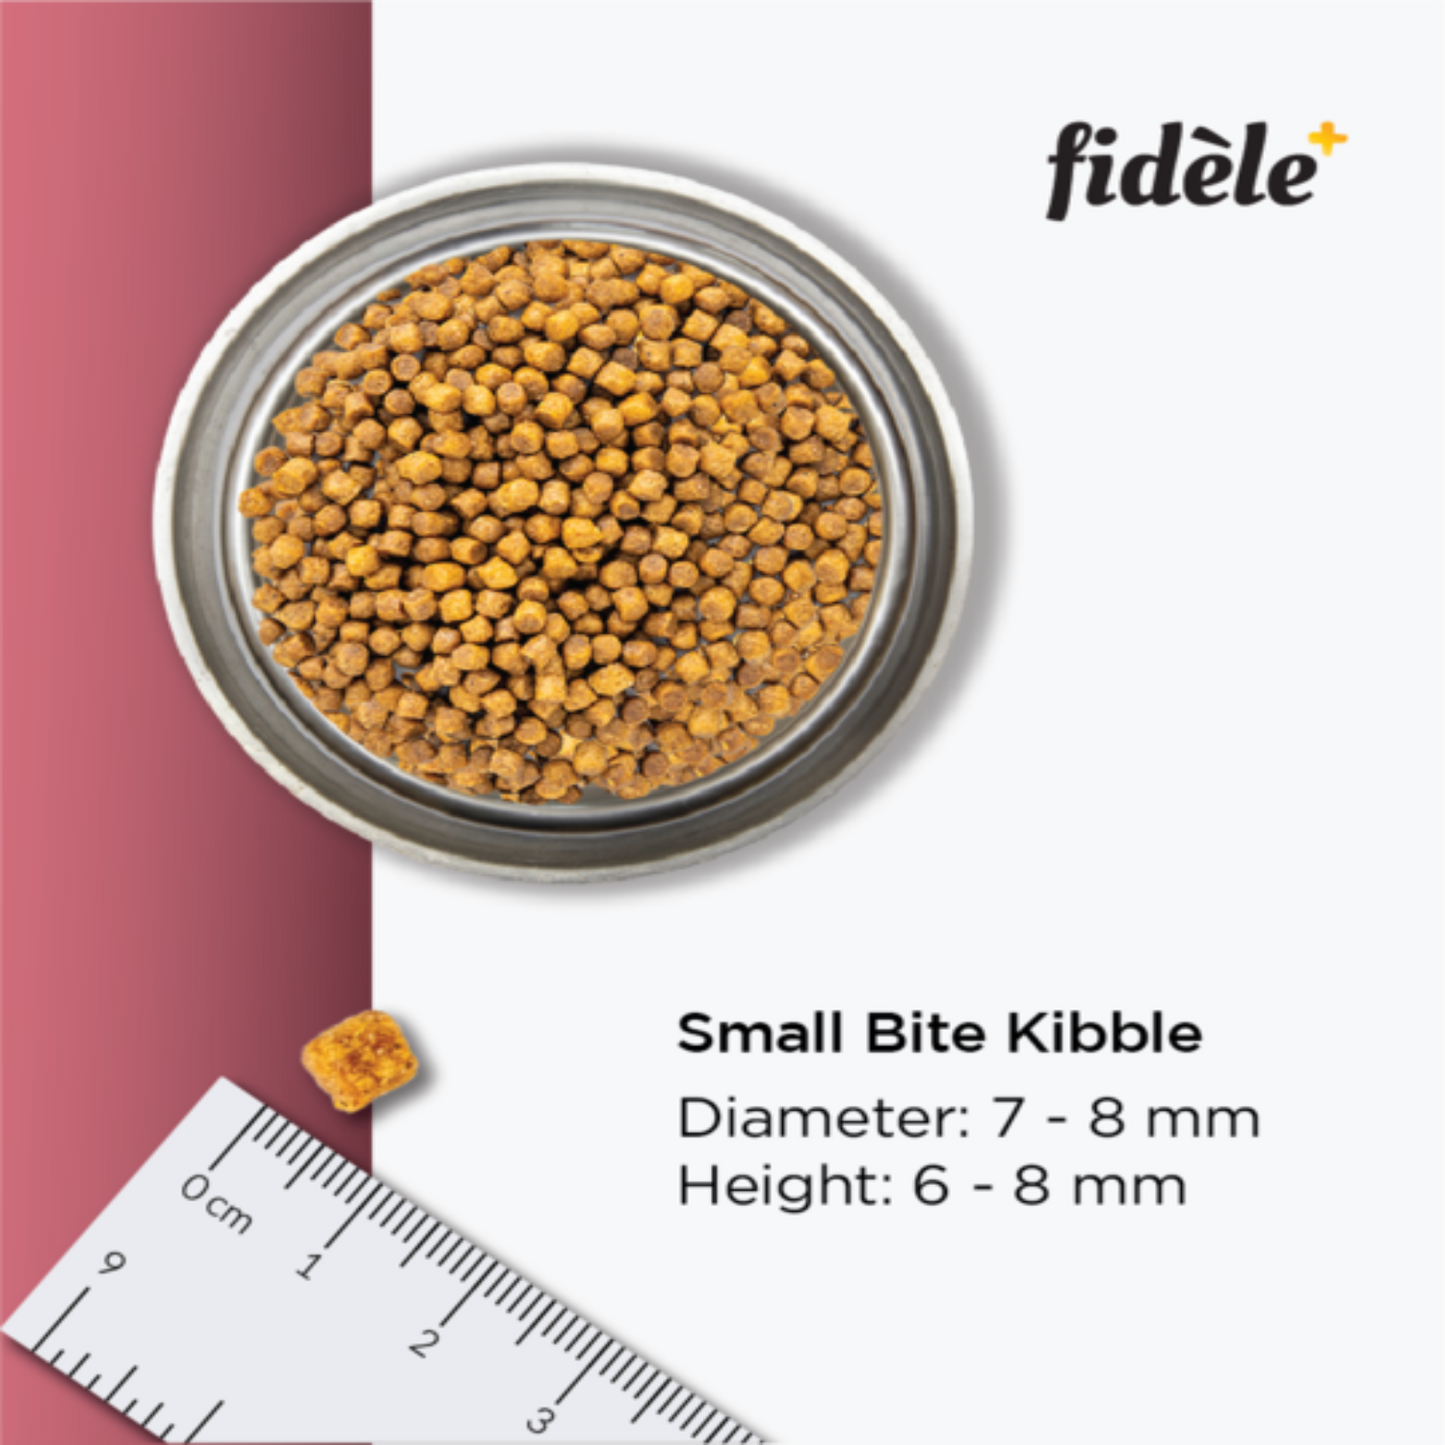 Fidele+ Small & Medium Puppy Dry Food